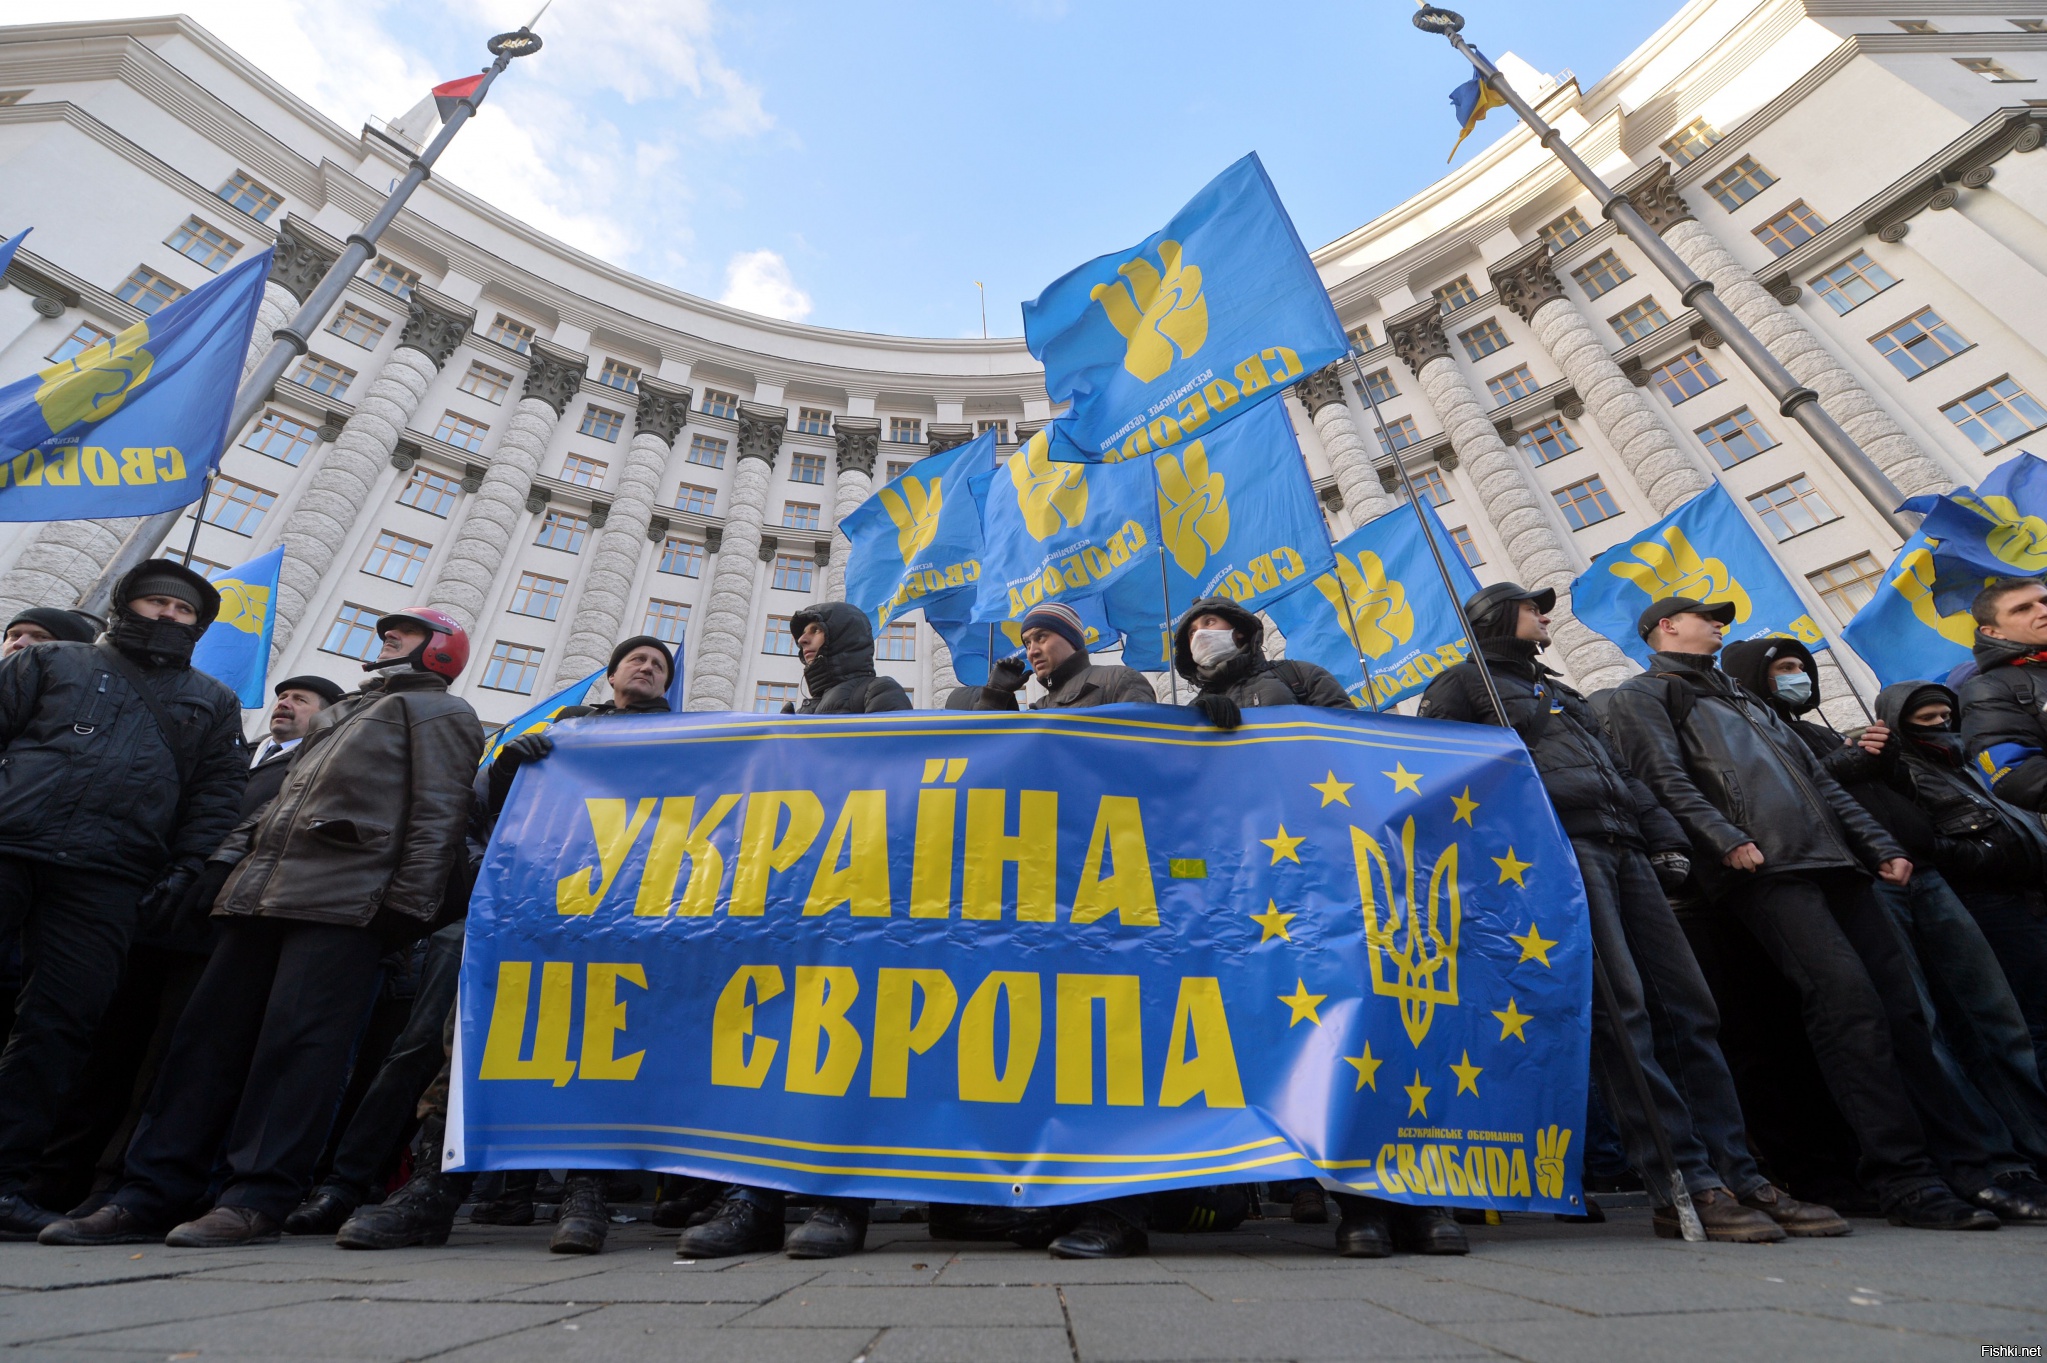 Украинцы про украину. Украина Европа. Украина цэ Европа. Оппозиция Украины. Украина це Европа Майдан.